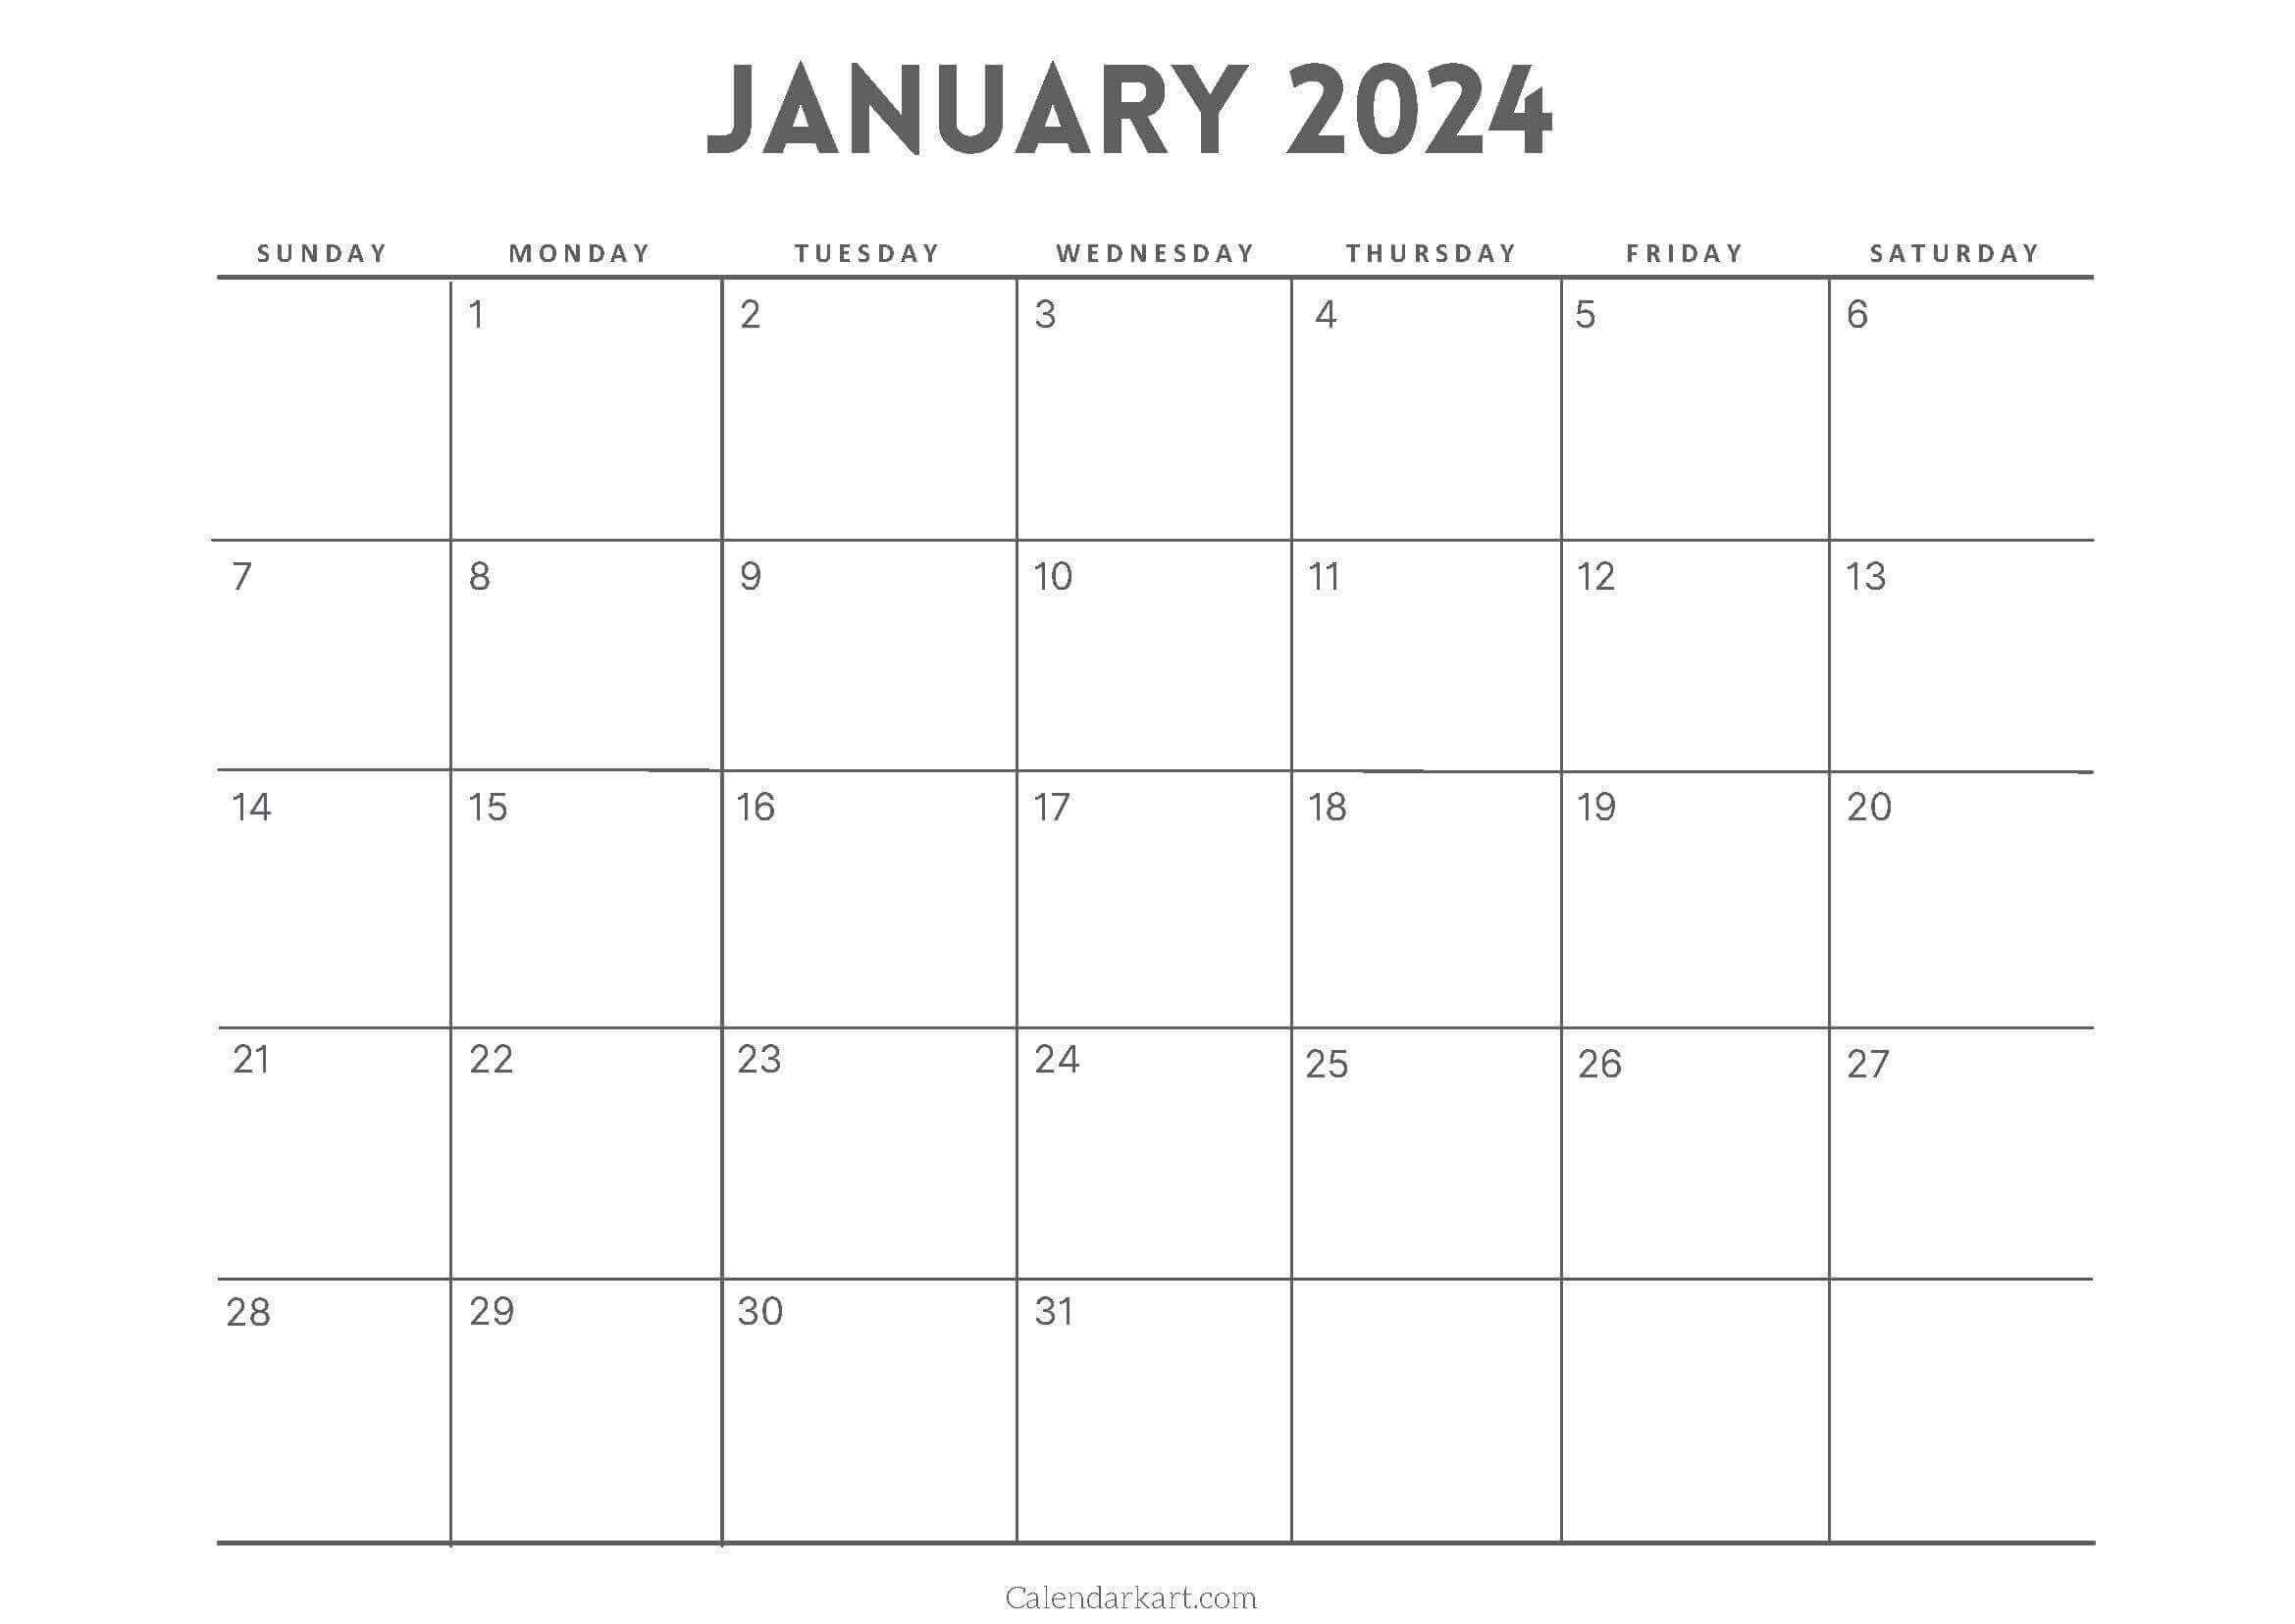 Free Printable January 2024 Calendars - Calendarkart | 2024 Printable Monthly Calendar Large Squares